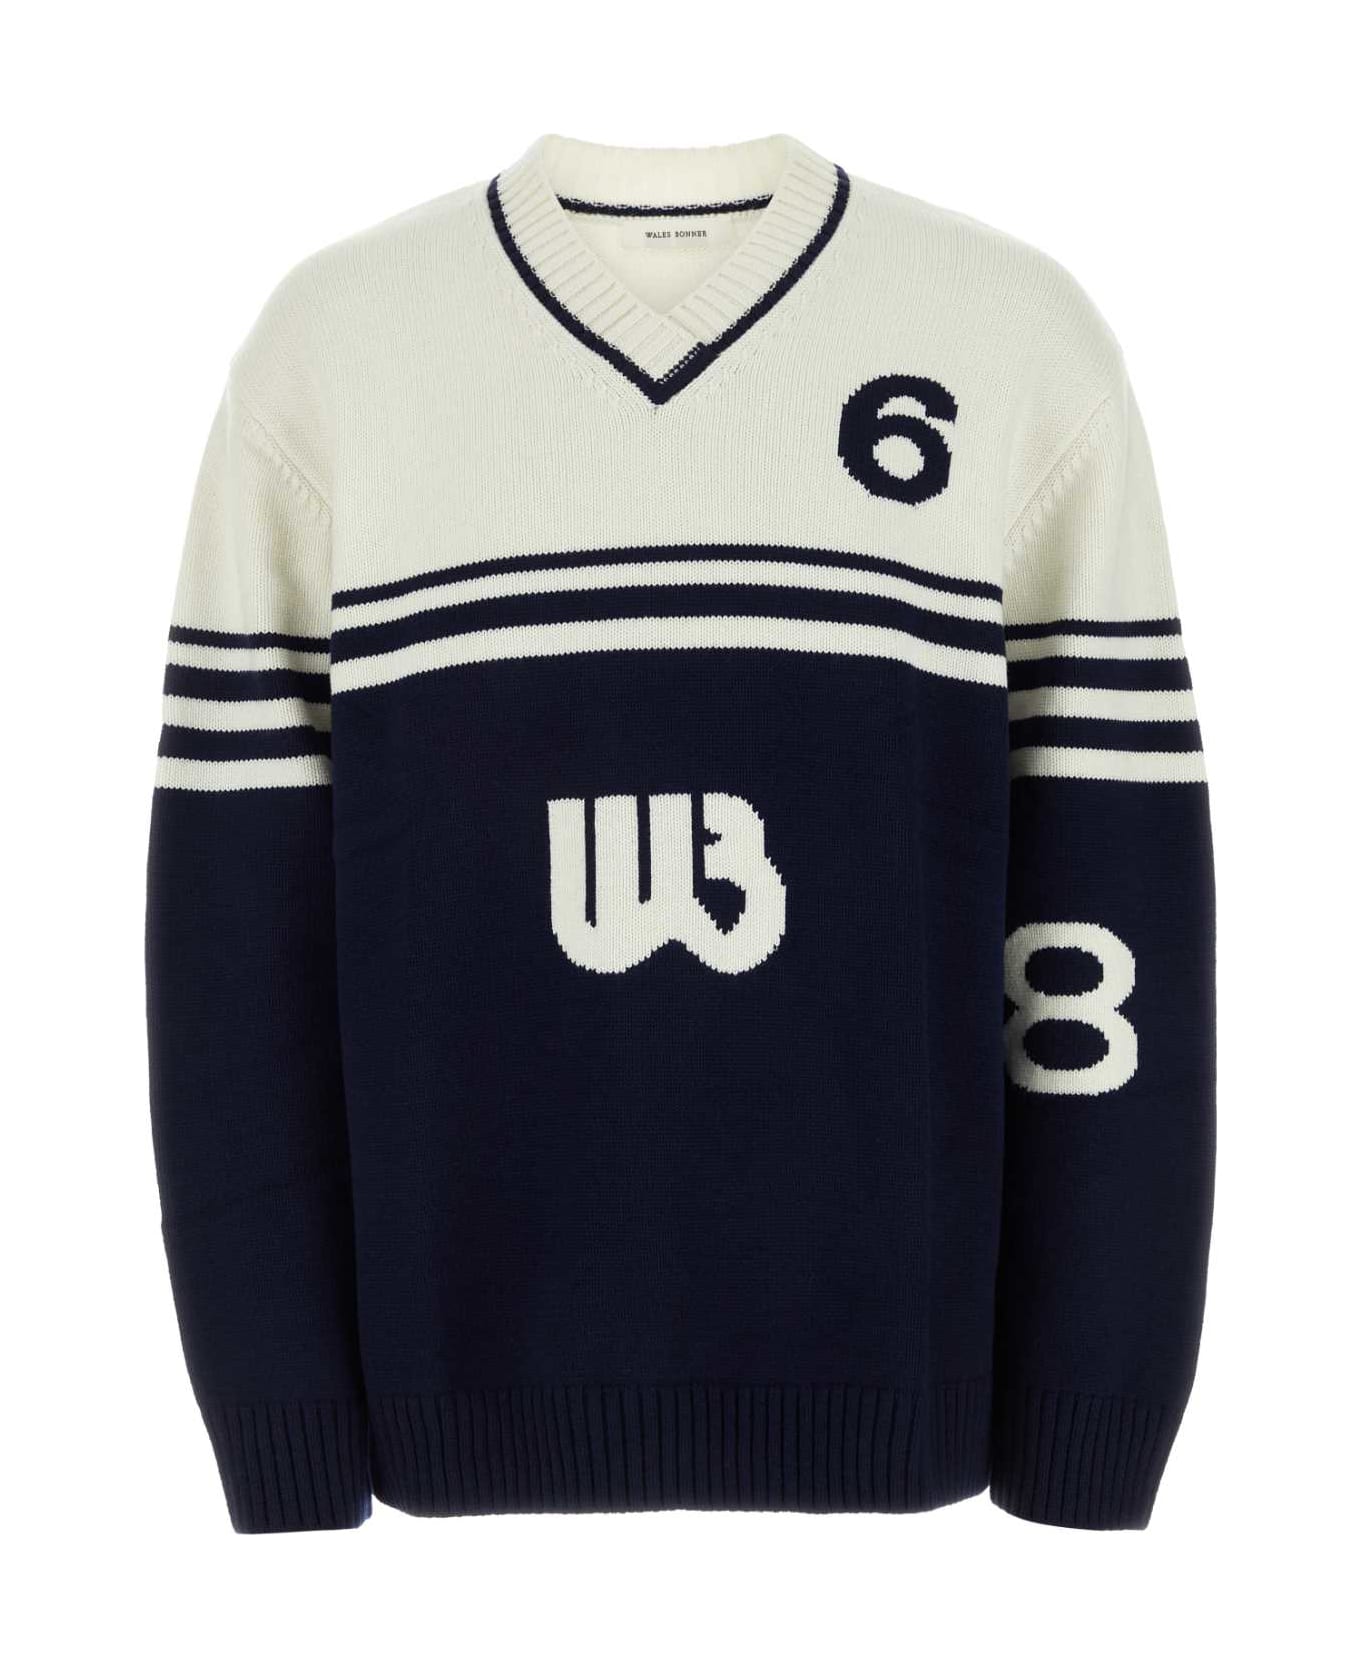 Wales Bonner Bicolor Wool Oversize Sweater - IVORYANDNAVY